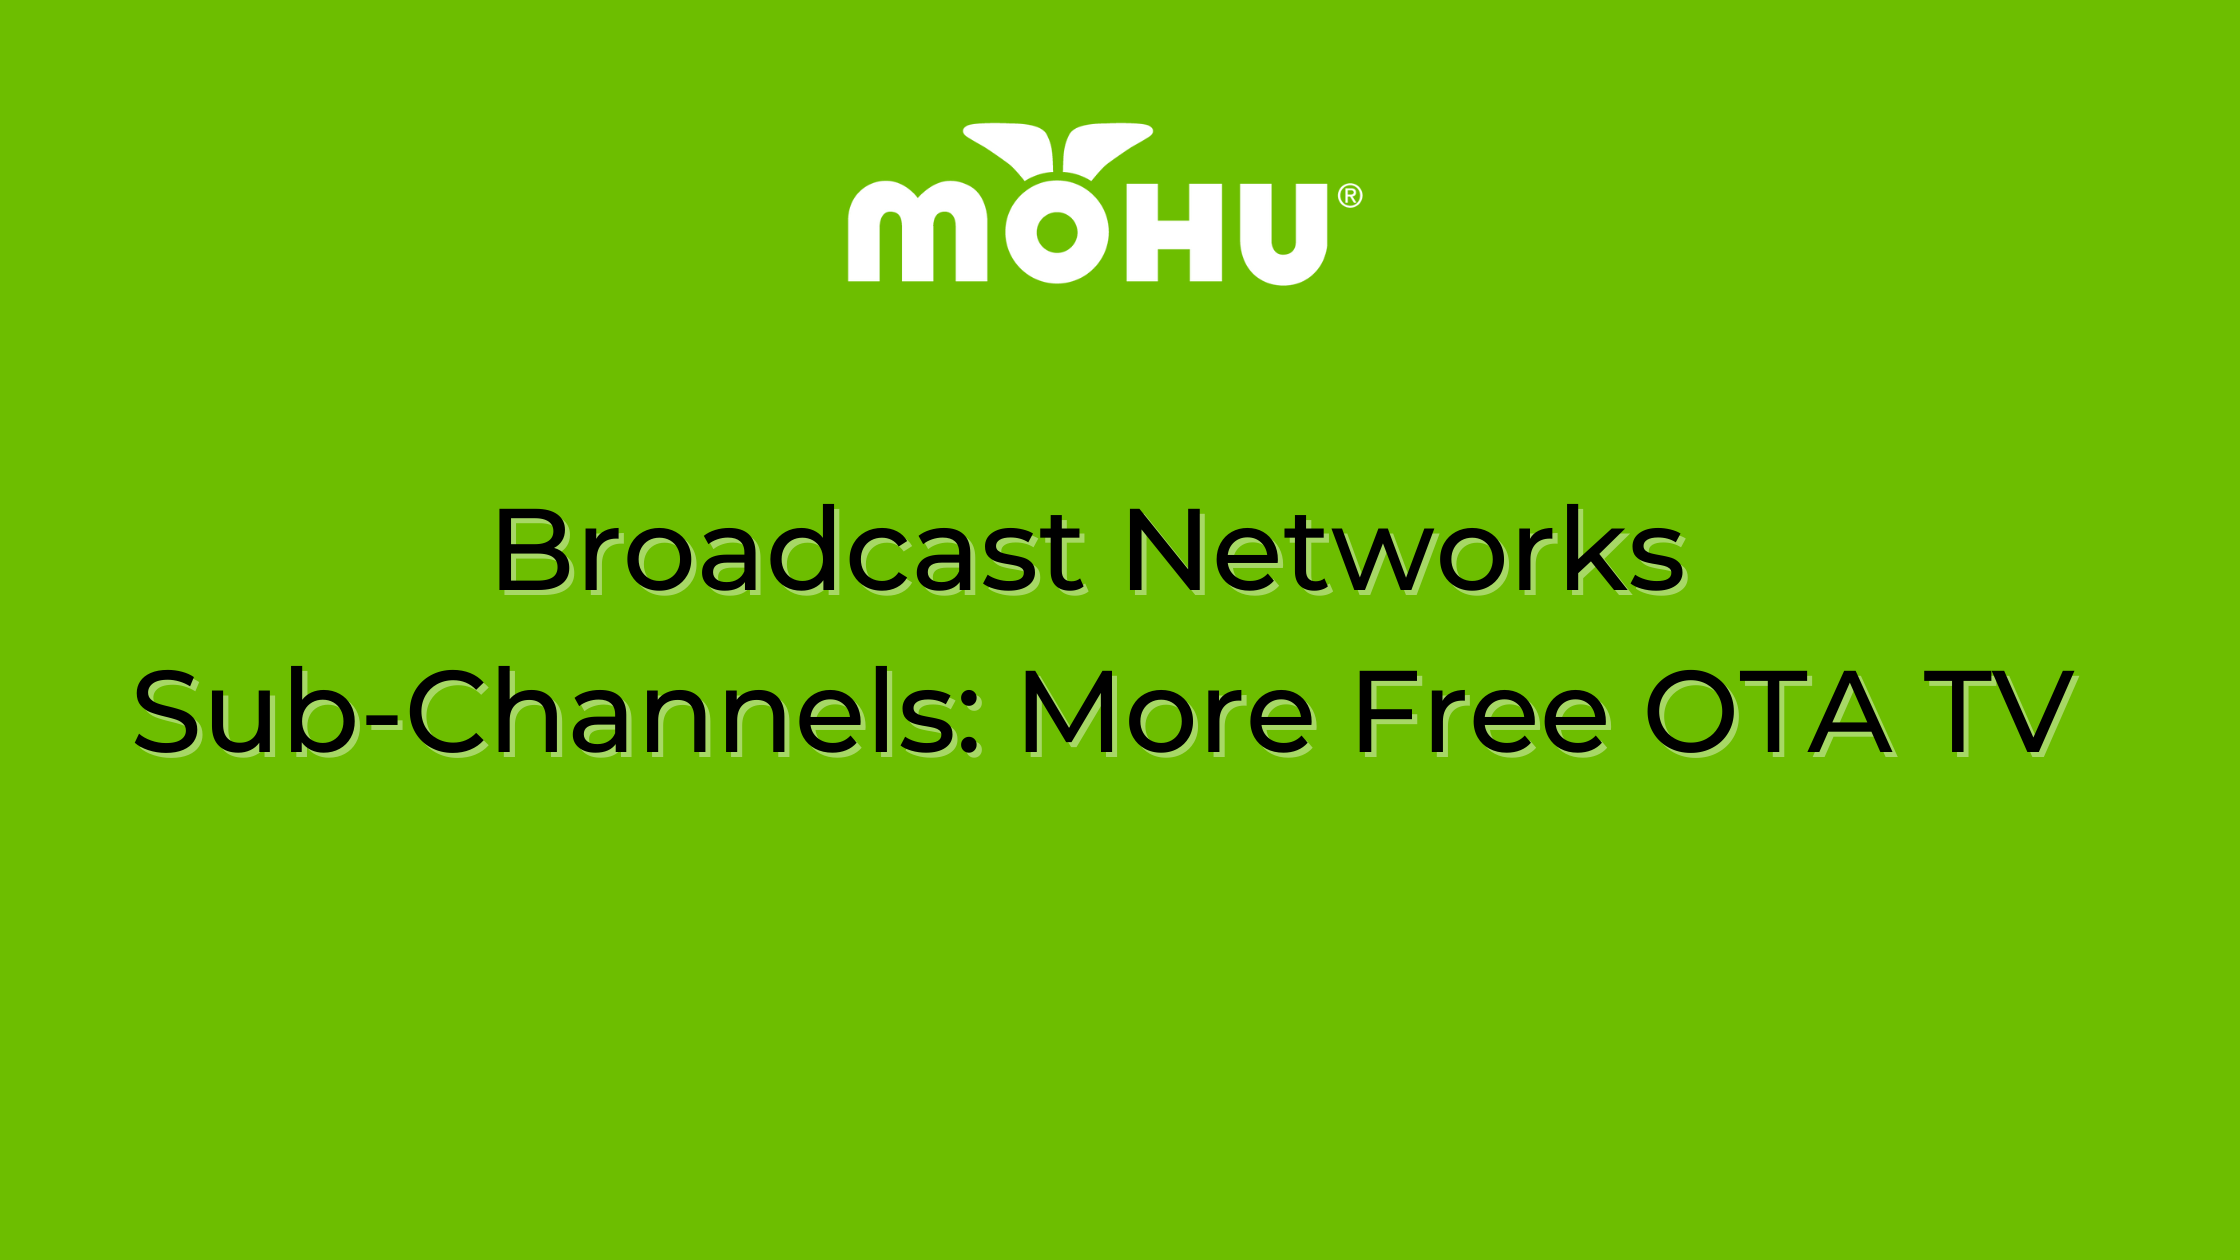 Broadcast Networks Sub-Channels More Free OTA TV, Mohu